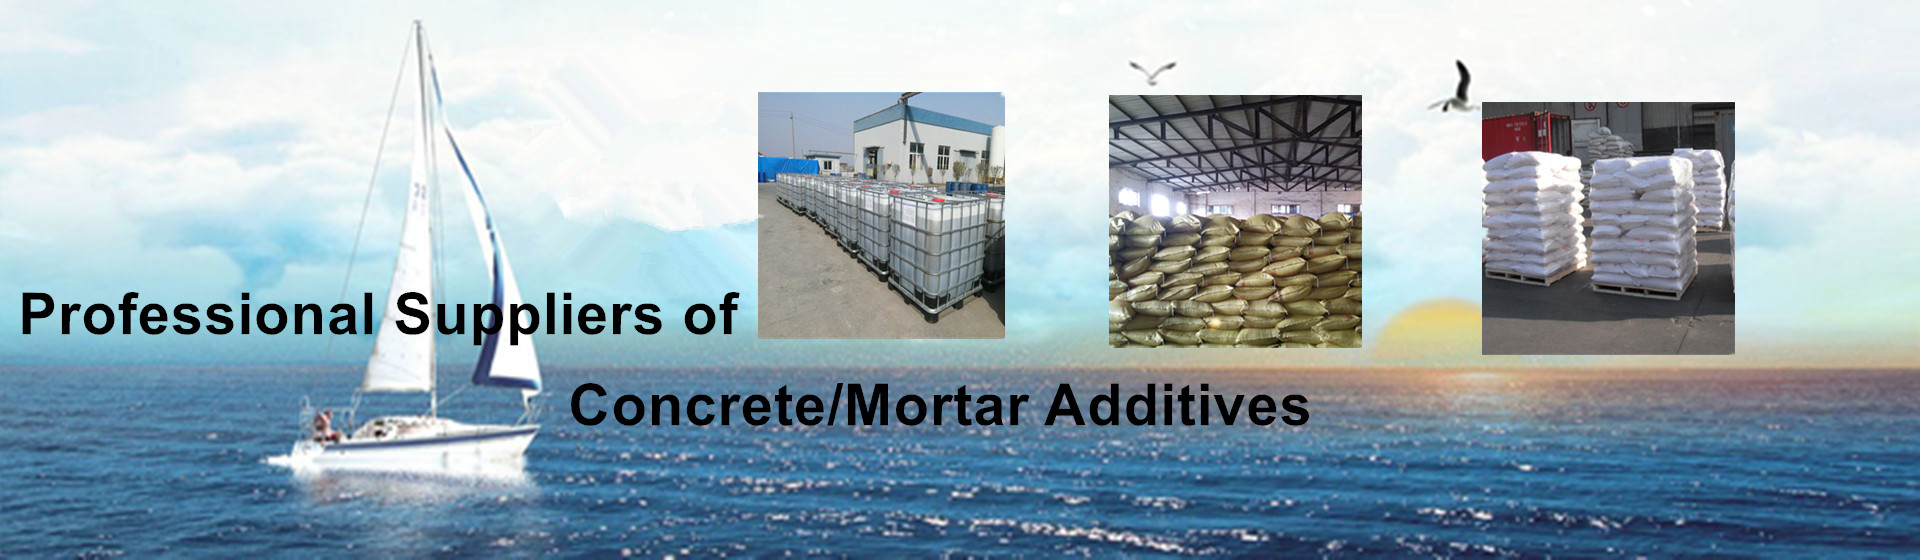 concrete mortar additives